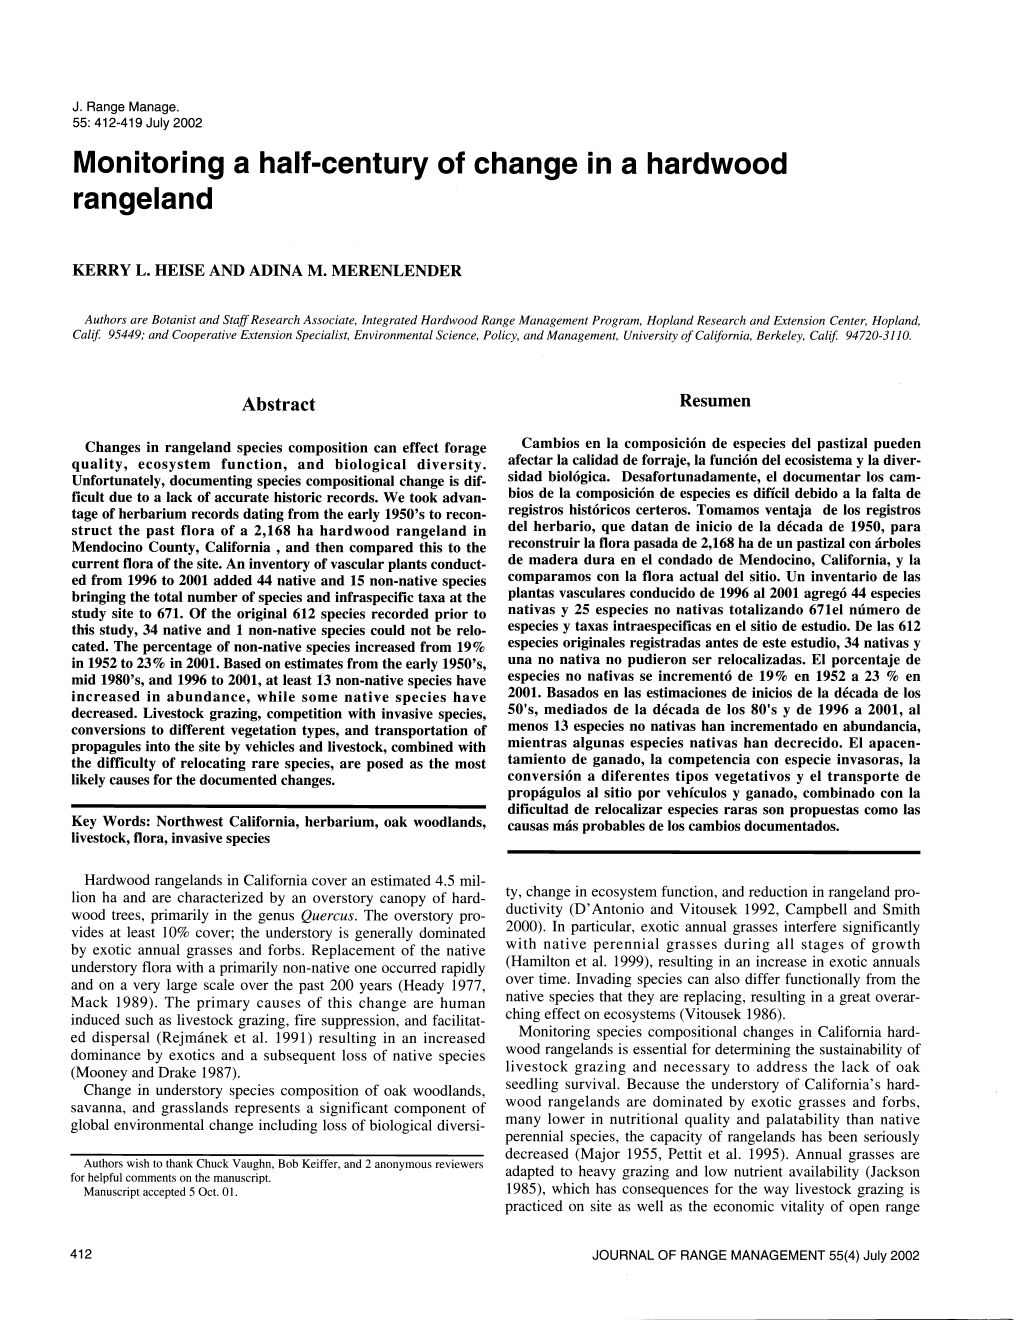 Monitoring a Half-Century of Change in a Hardwood Rangeland